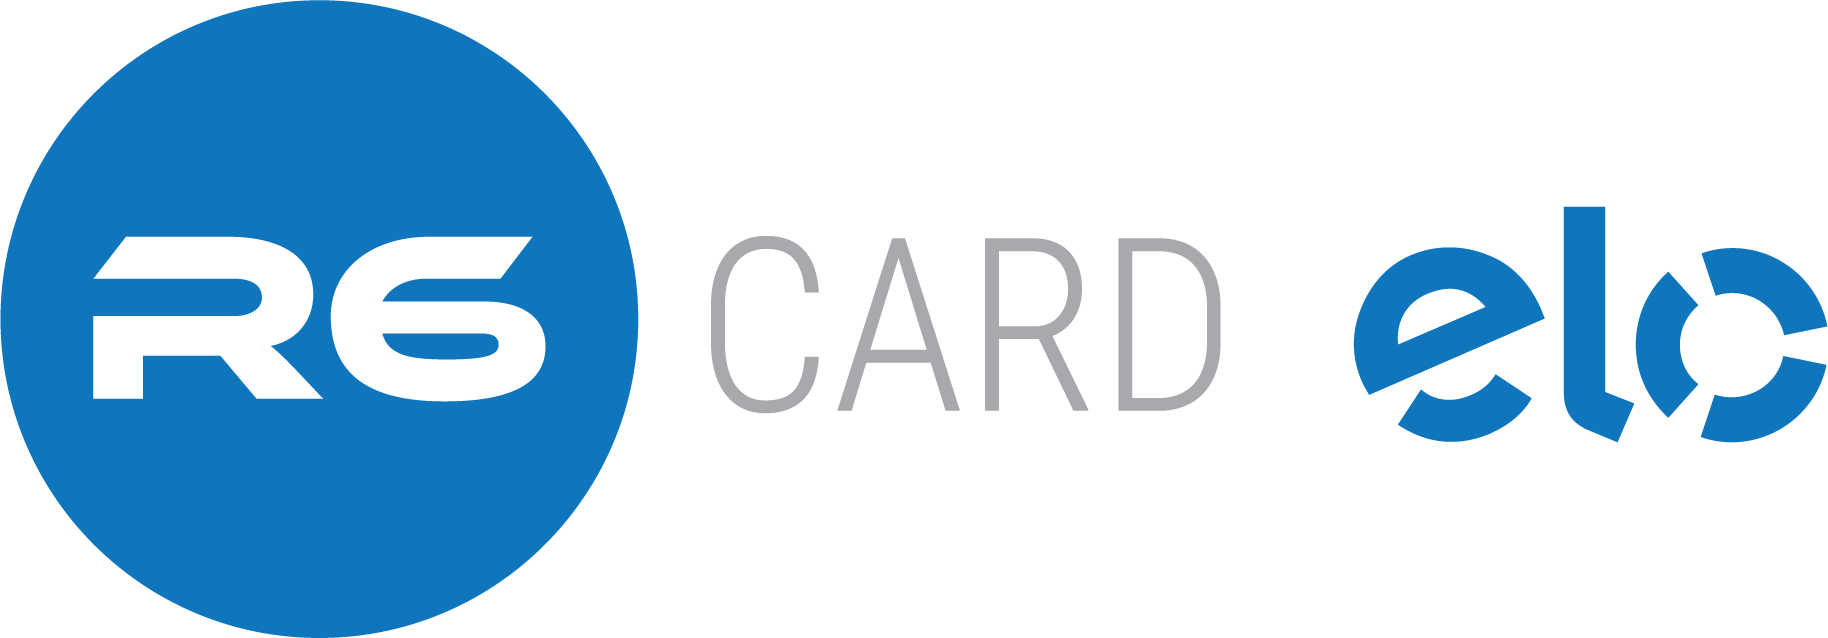 logo-r6-card-elo-filled